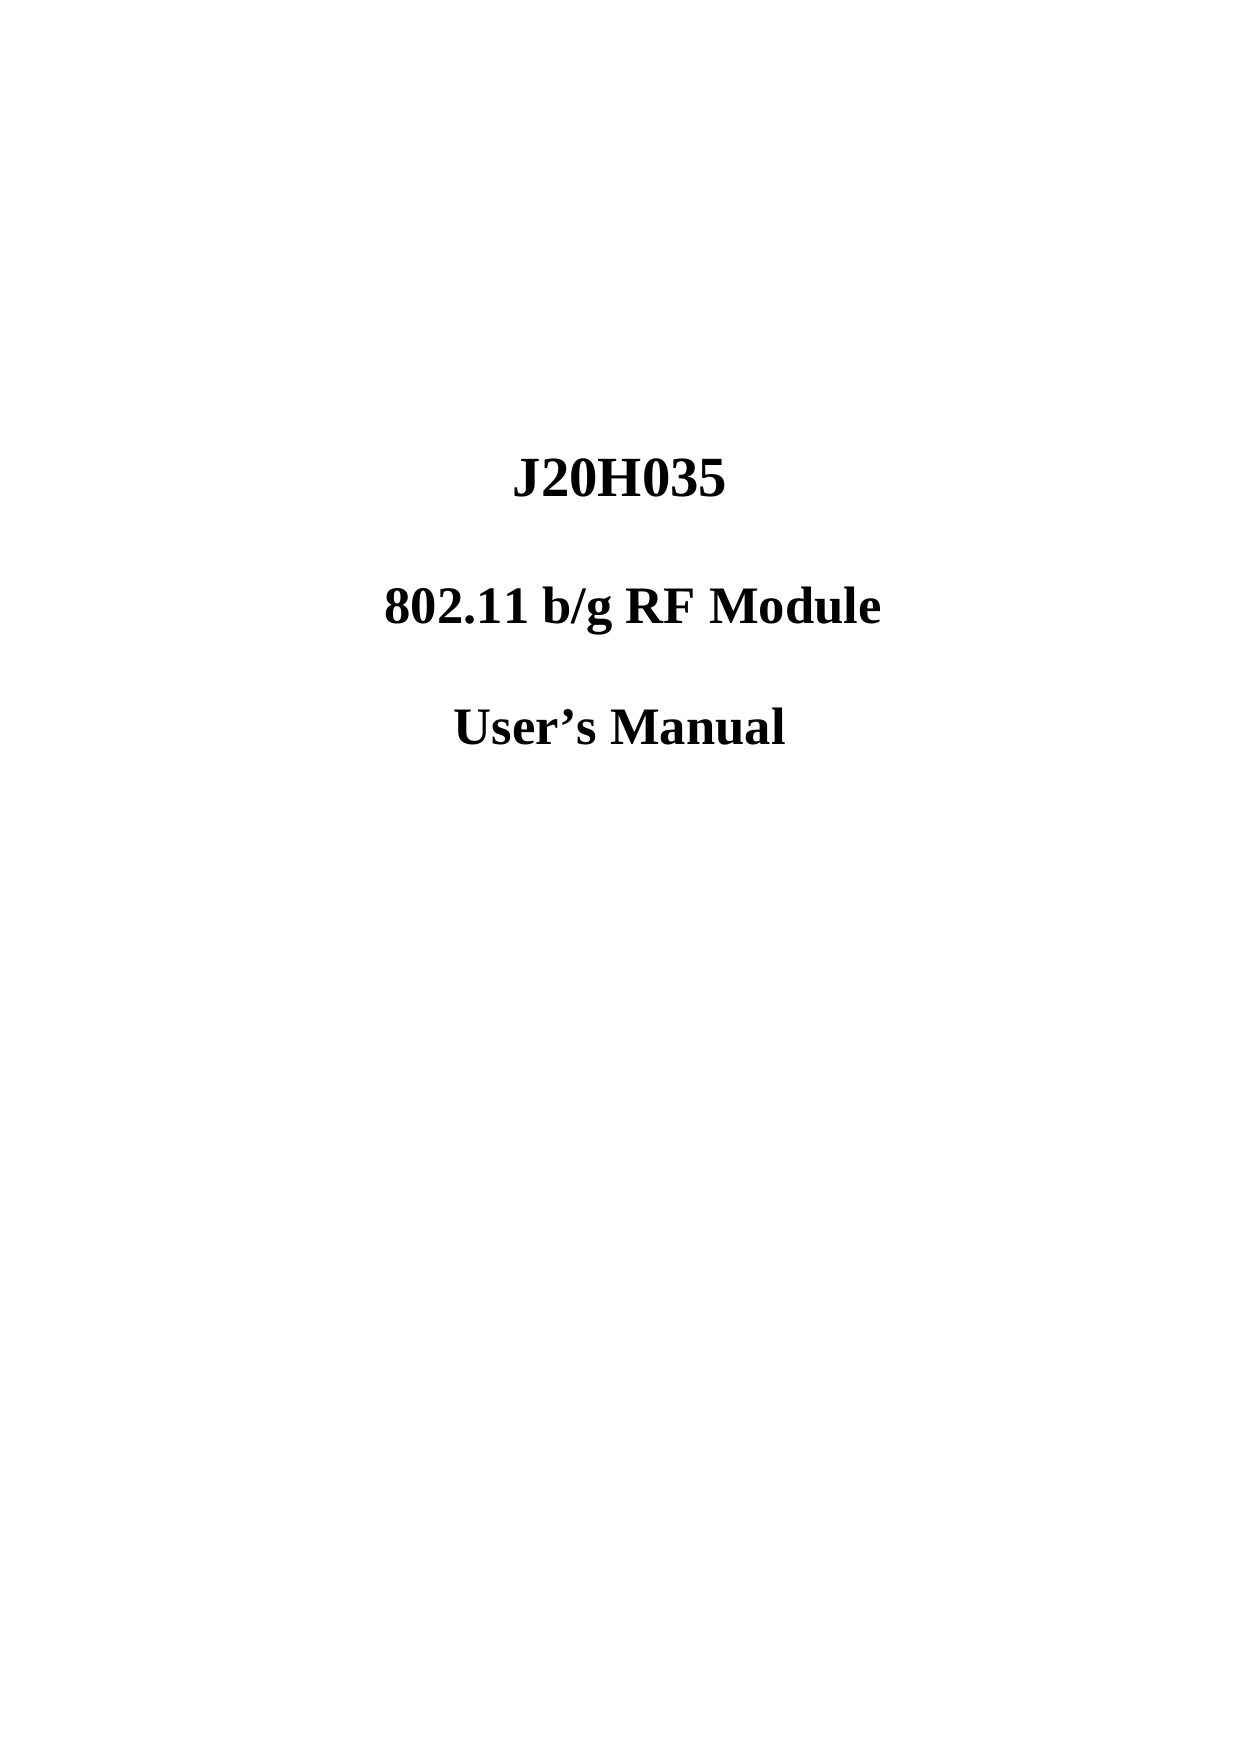     J20H035    802.11 b/g RF Module  User’s Manual   